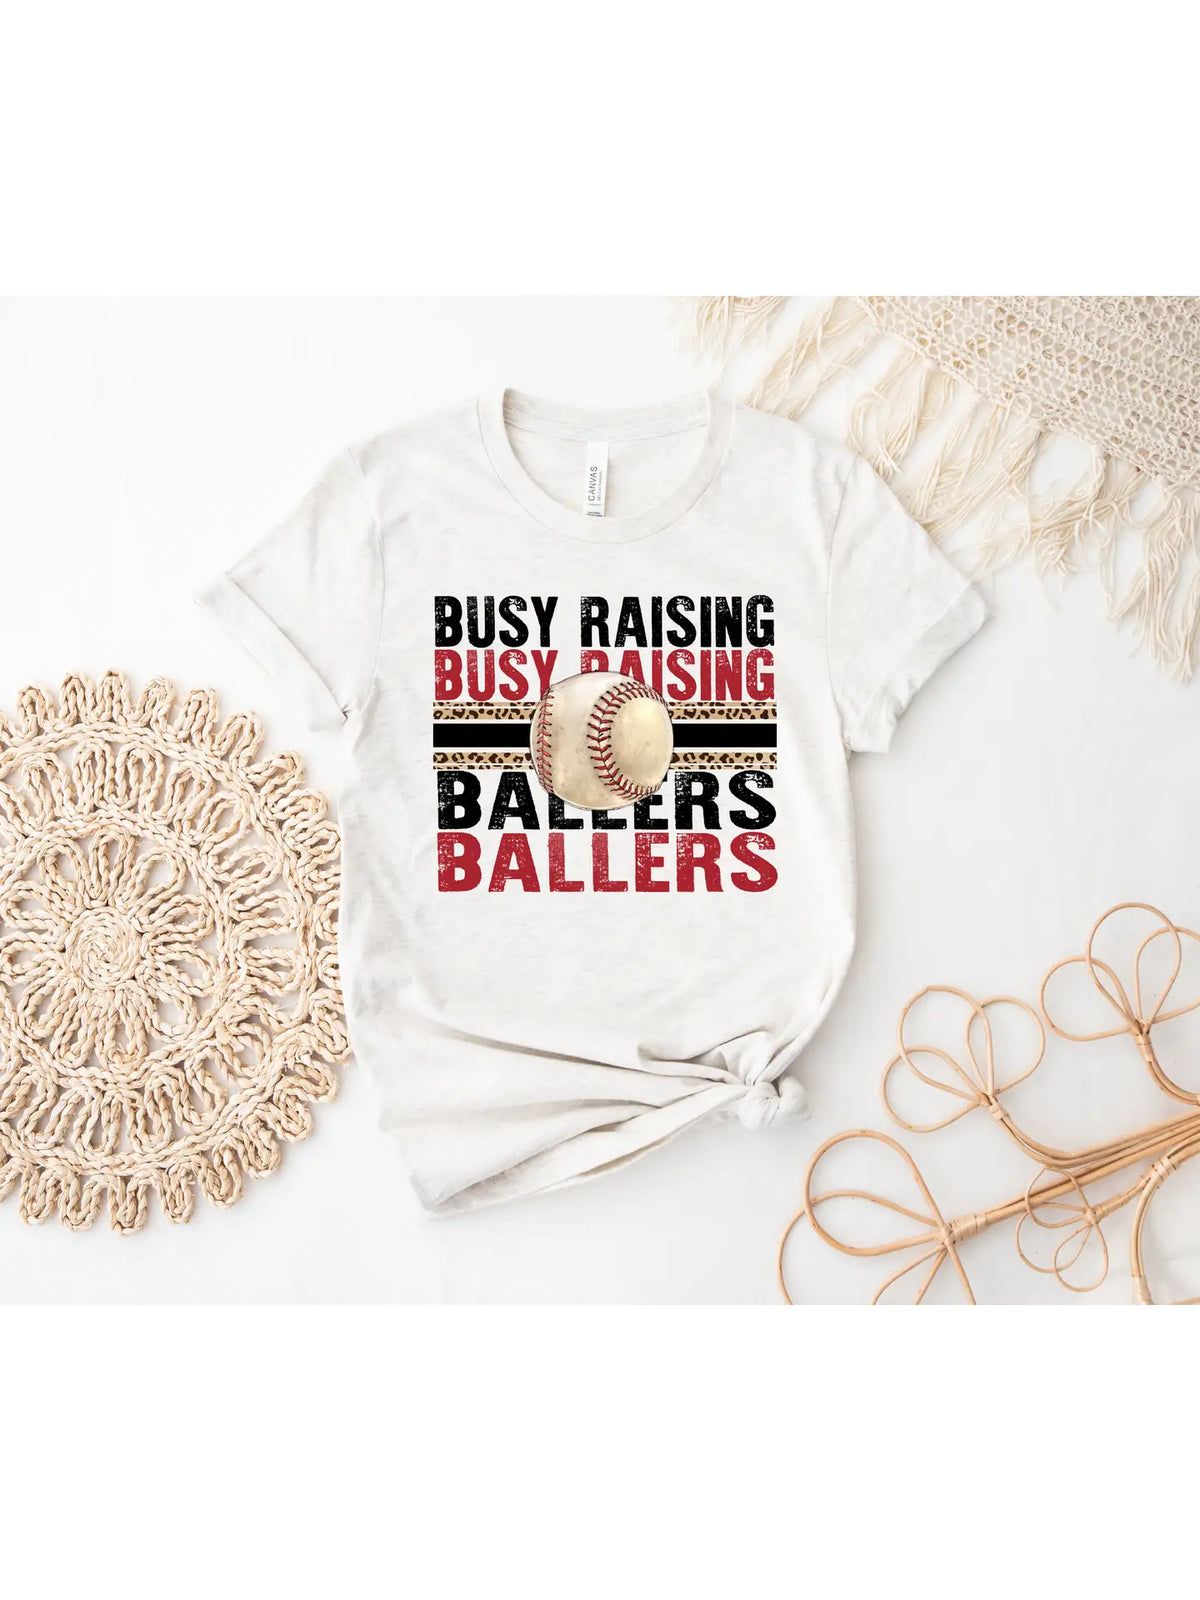 Busy Raising Ballers - T-shirt - KC Outfitter